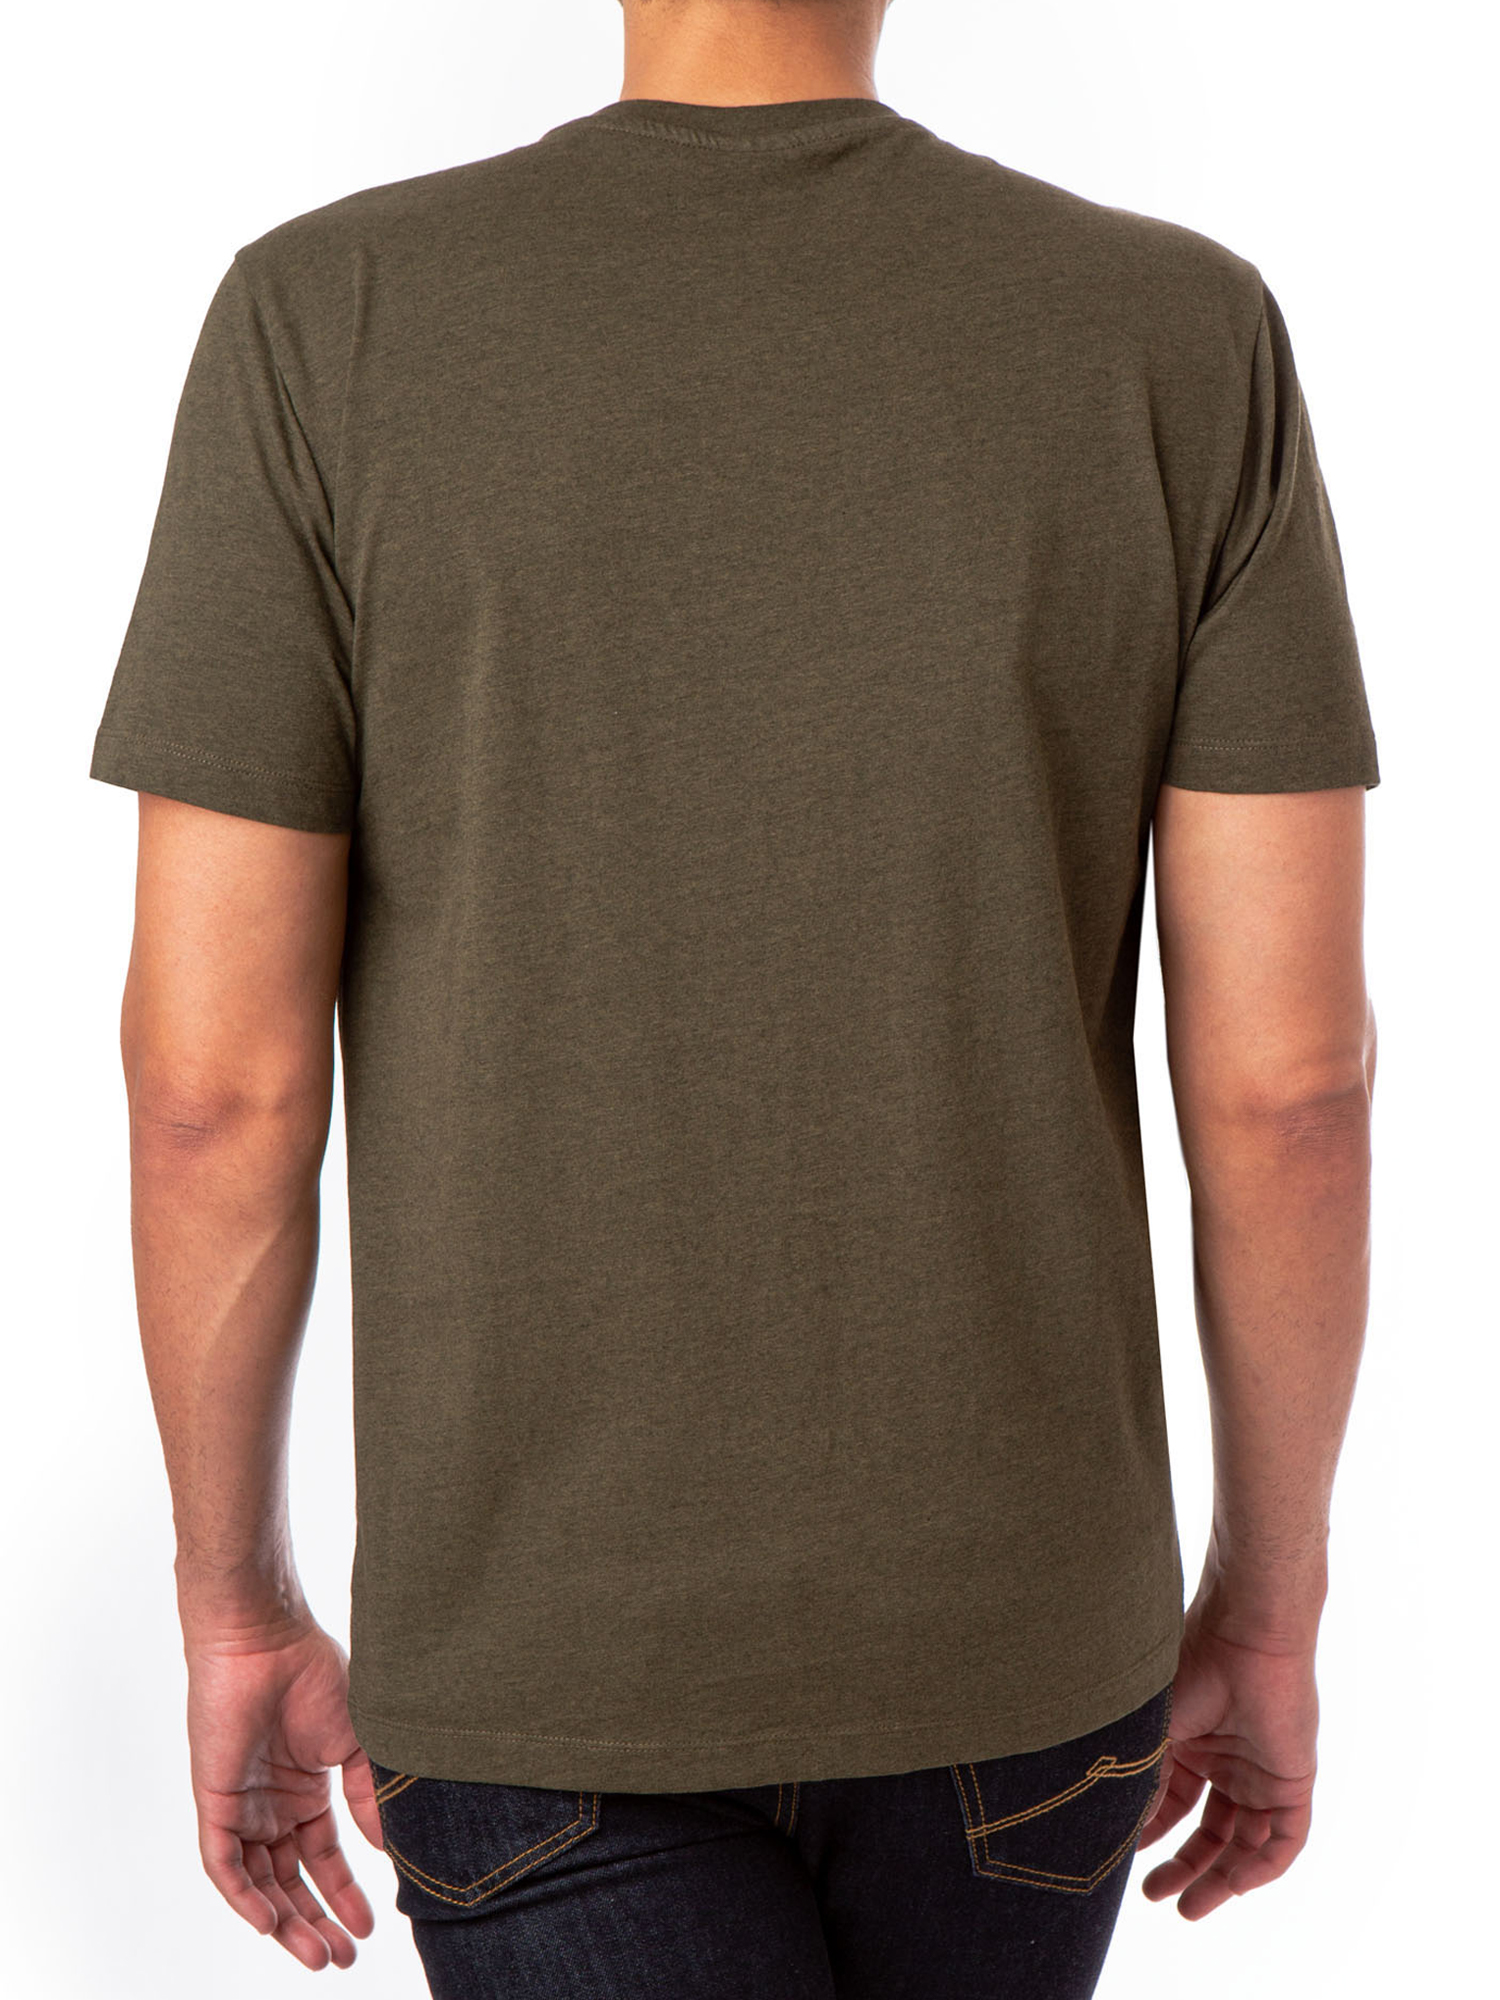 U.S. Polo Assn. Men's Crew Neck Pocket T-Shirt - image 3 of 3